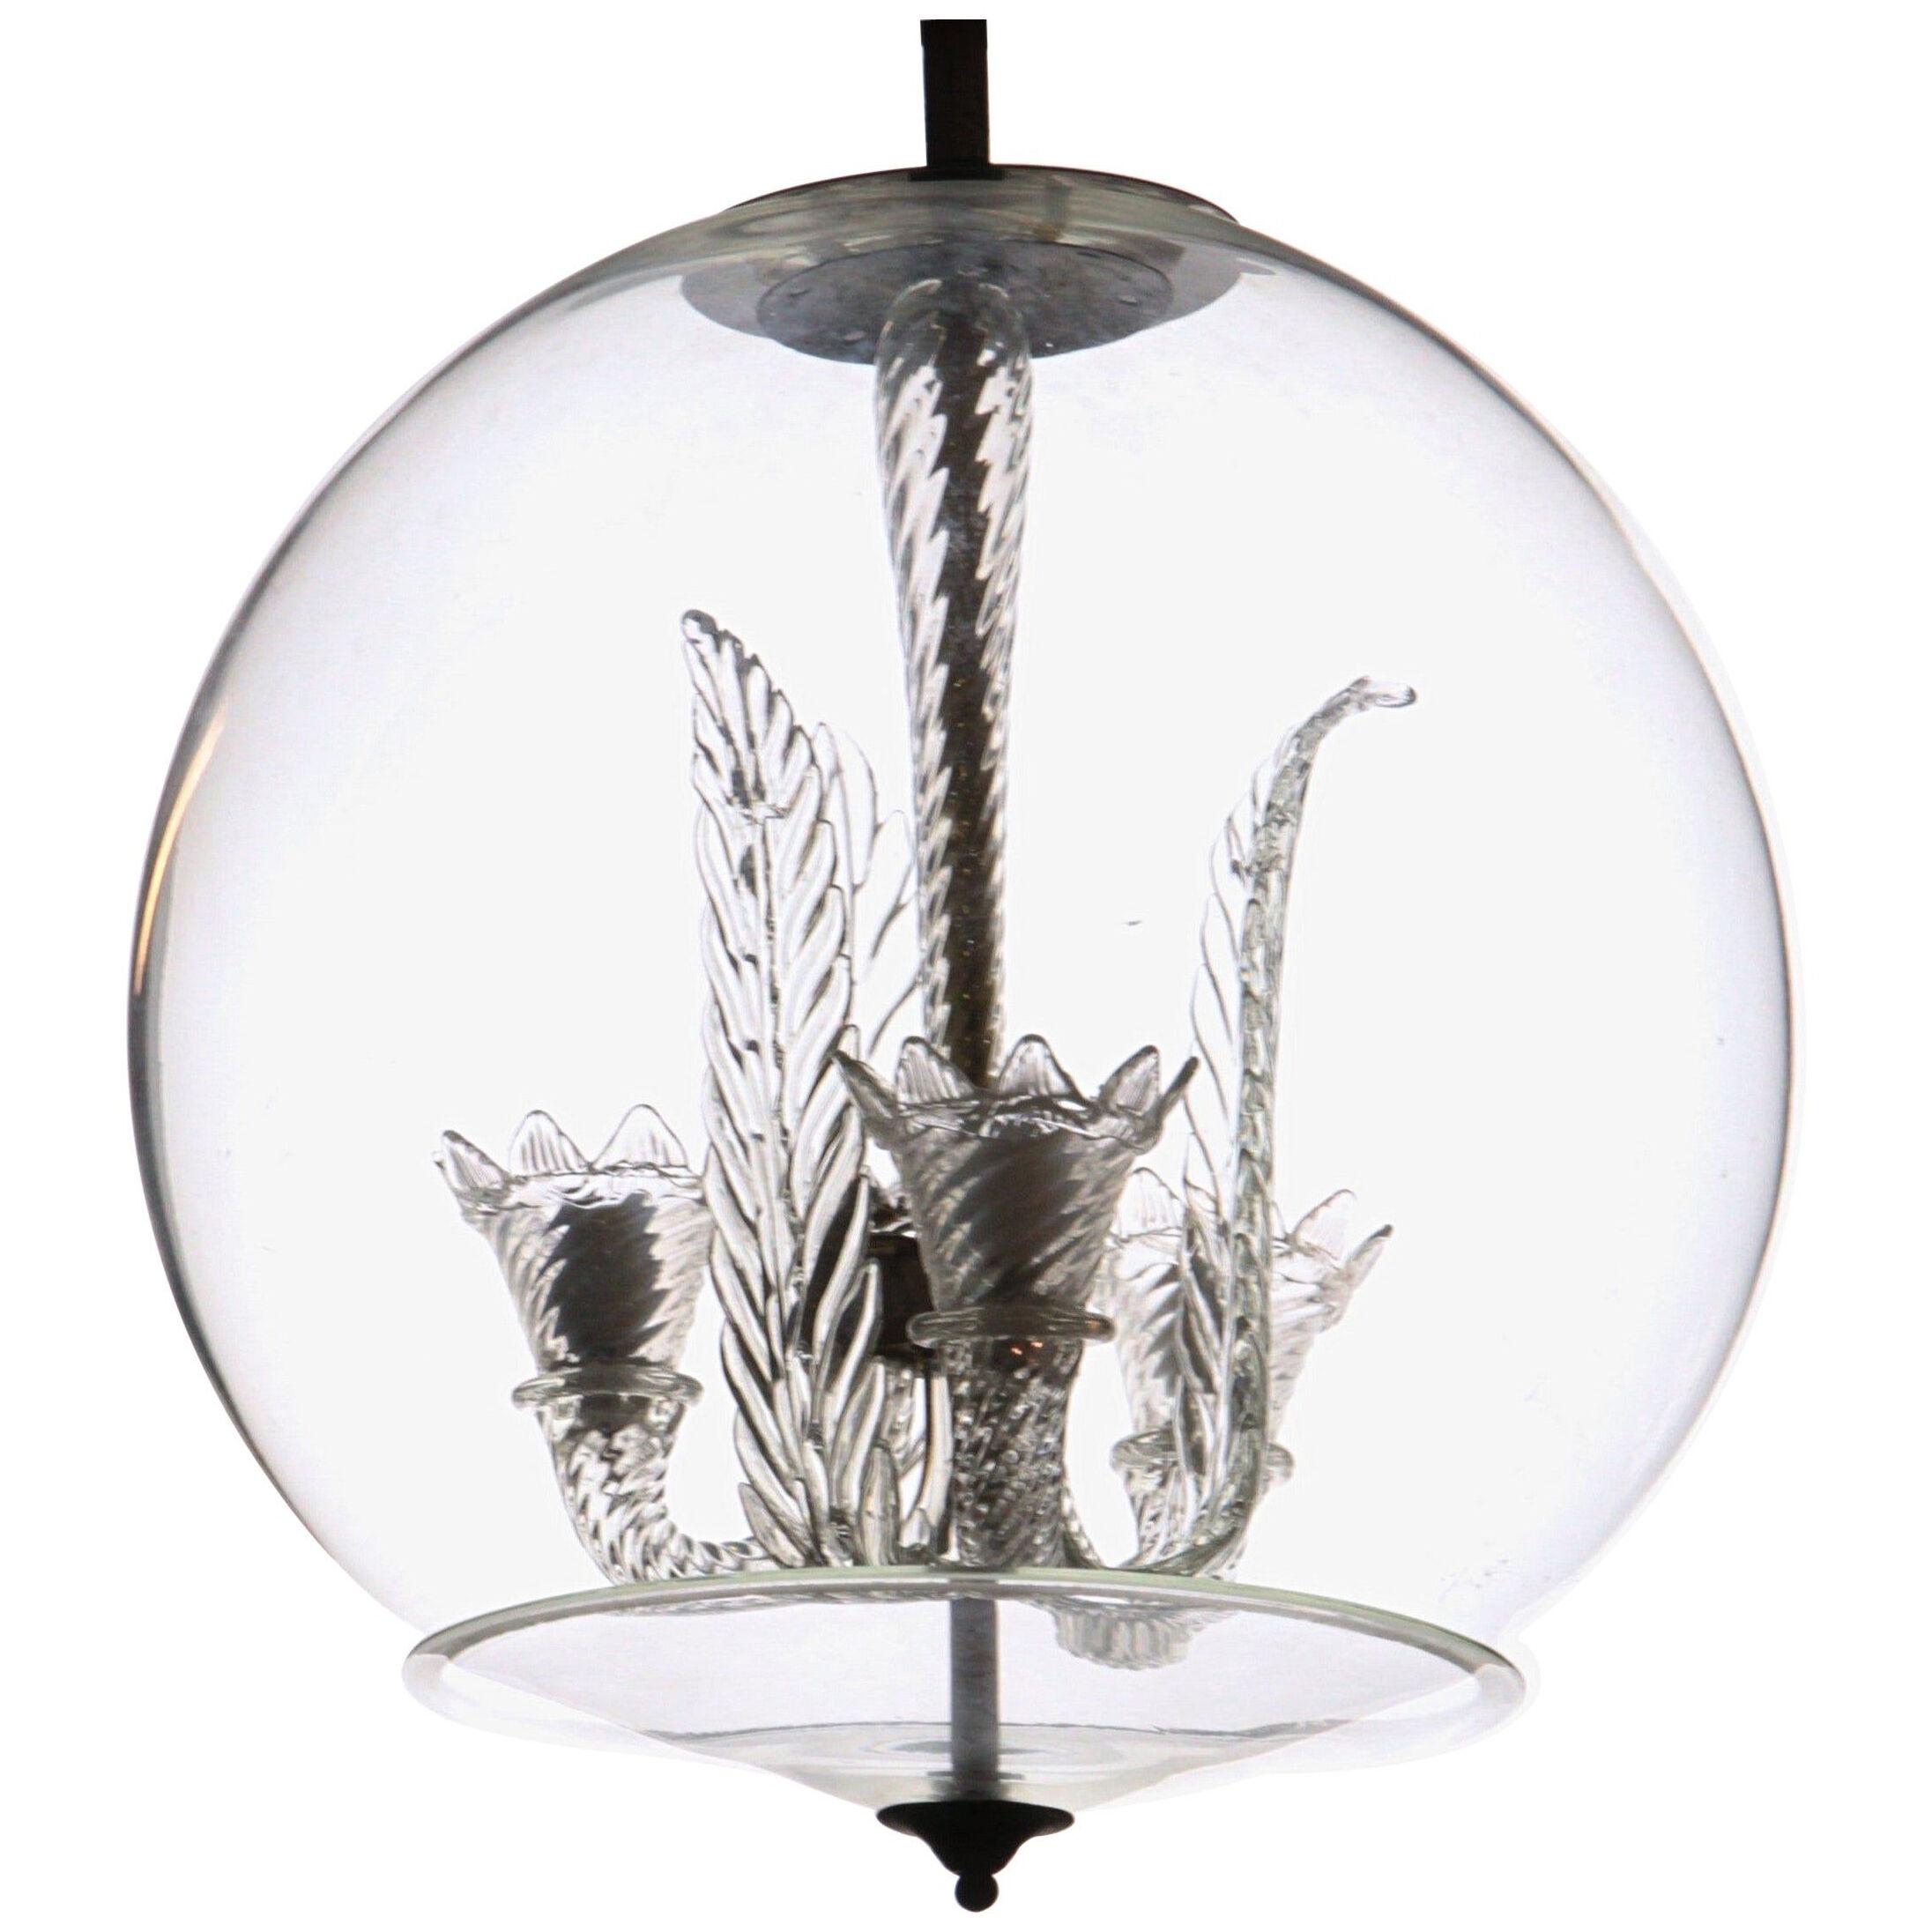 Tommaso Buzzi for Venini, Three Arms Chandelier Inside a Glass Sphere, 1930s